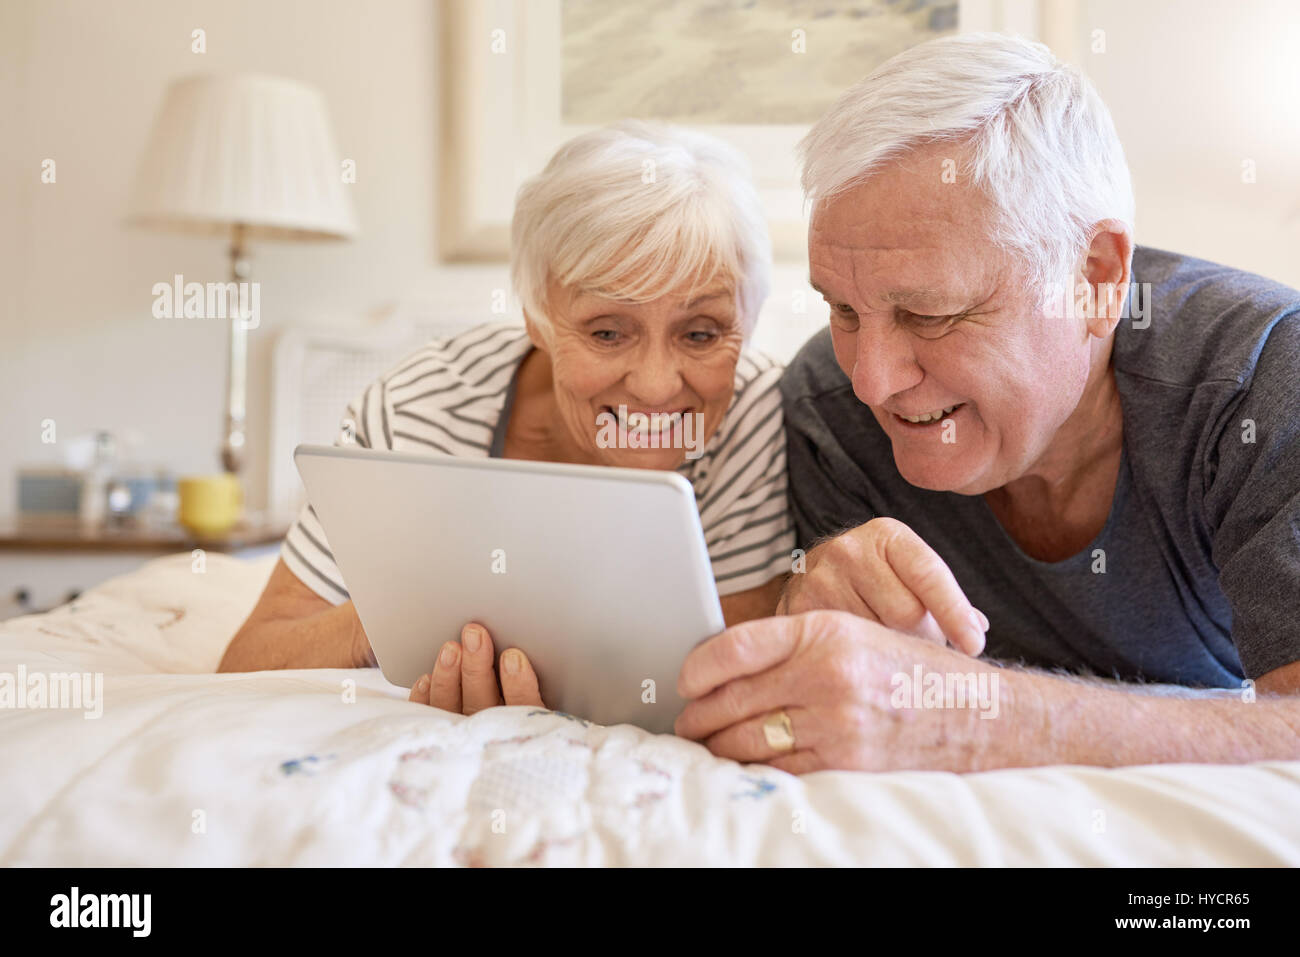 Smiling senior couple using a digital tablet together in bed Banque D'Images